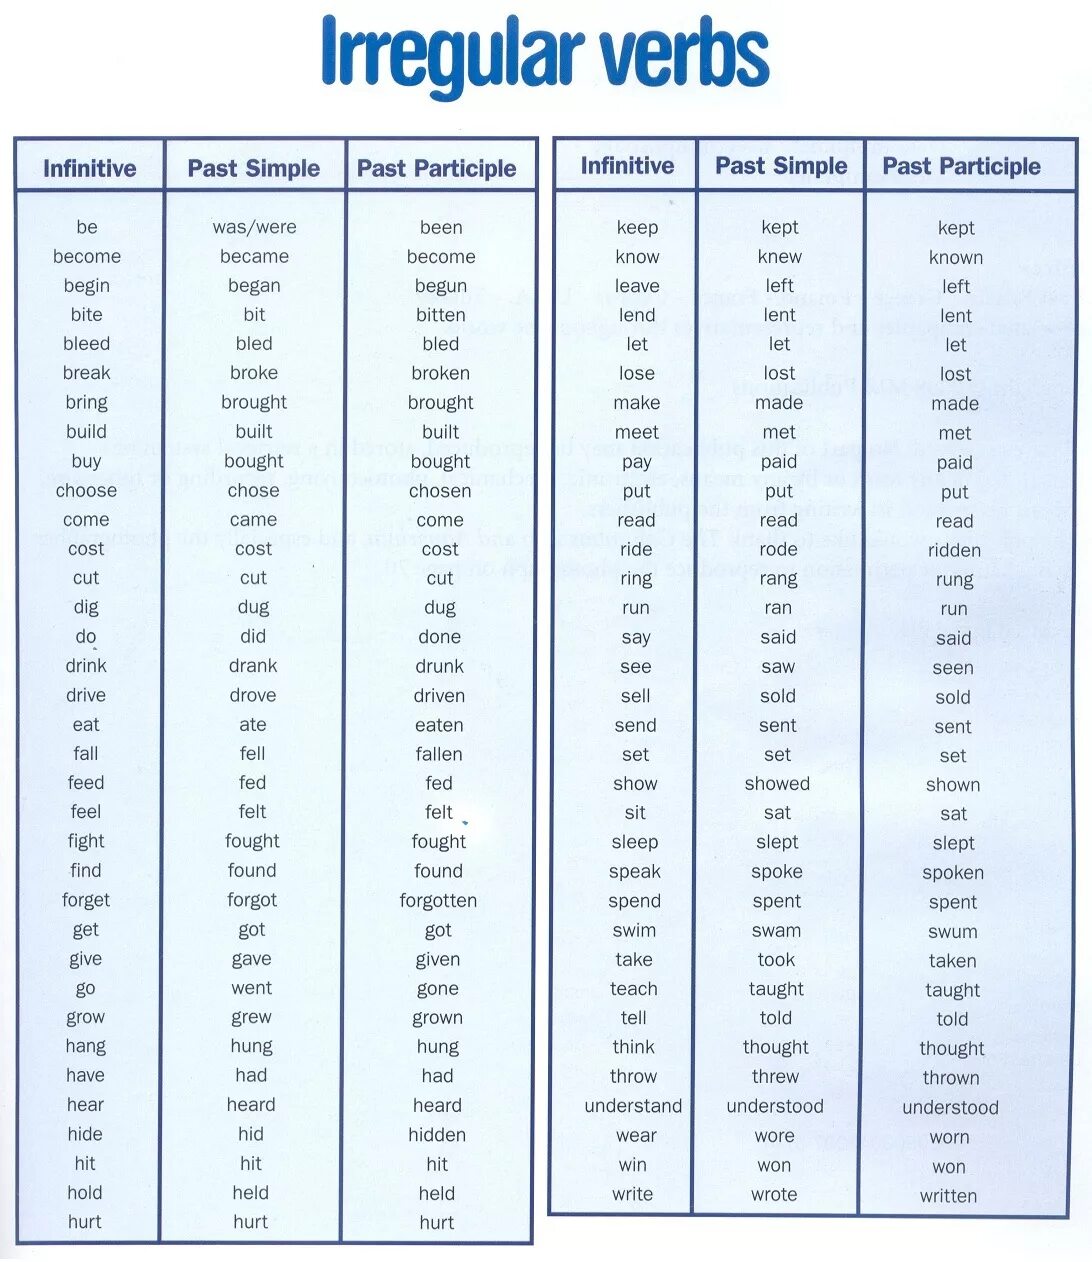 Past simple Irregular verbs таблица. Past simple таблица неправильных глаголов. Past participle неправильные глаголы. Неправильные глаголы английского Irregular verbs. Cook в прошедшем